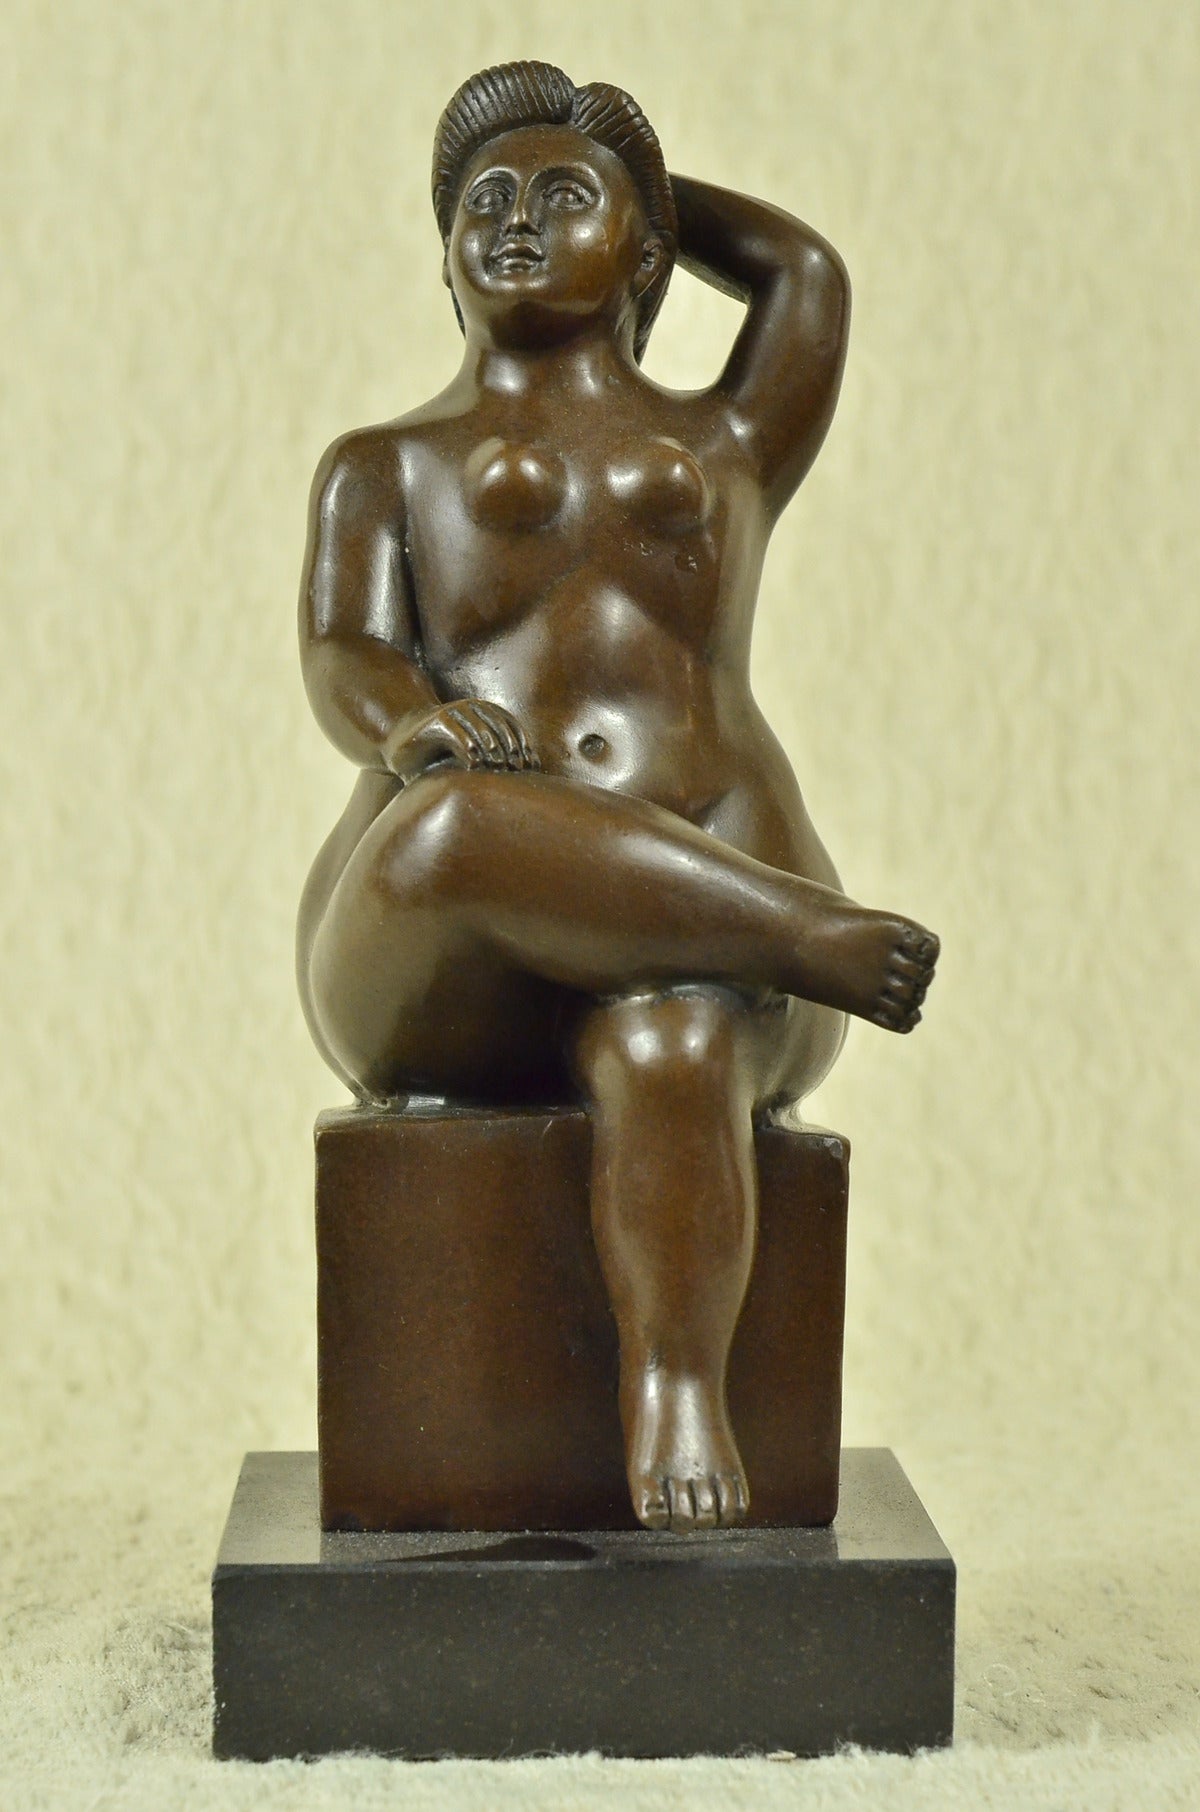 Handcrafted bronze sculpture SALE Bull Rides Woman Plump Botero Fernando